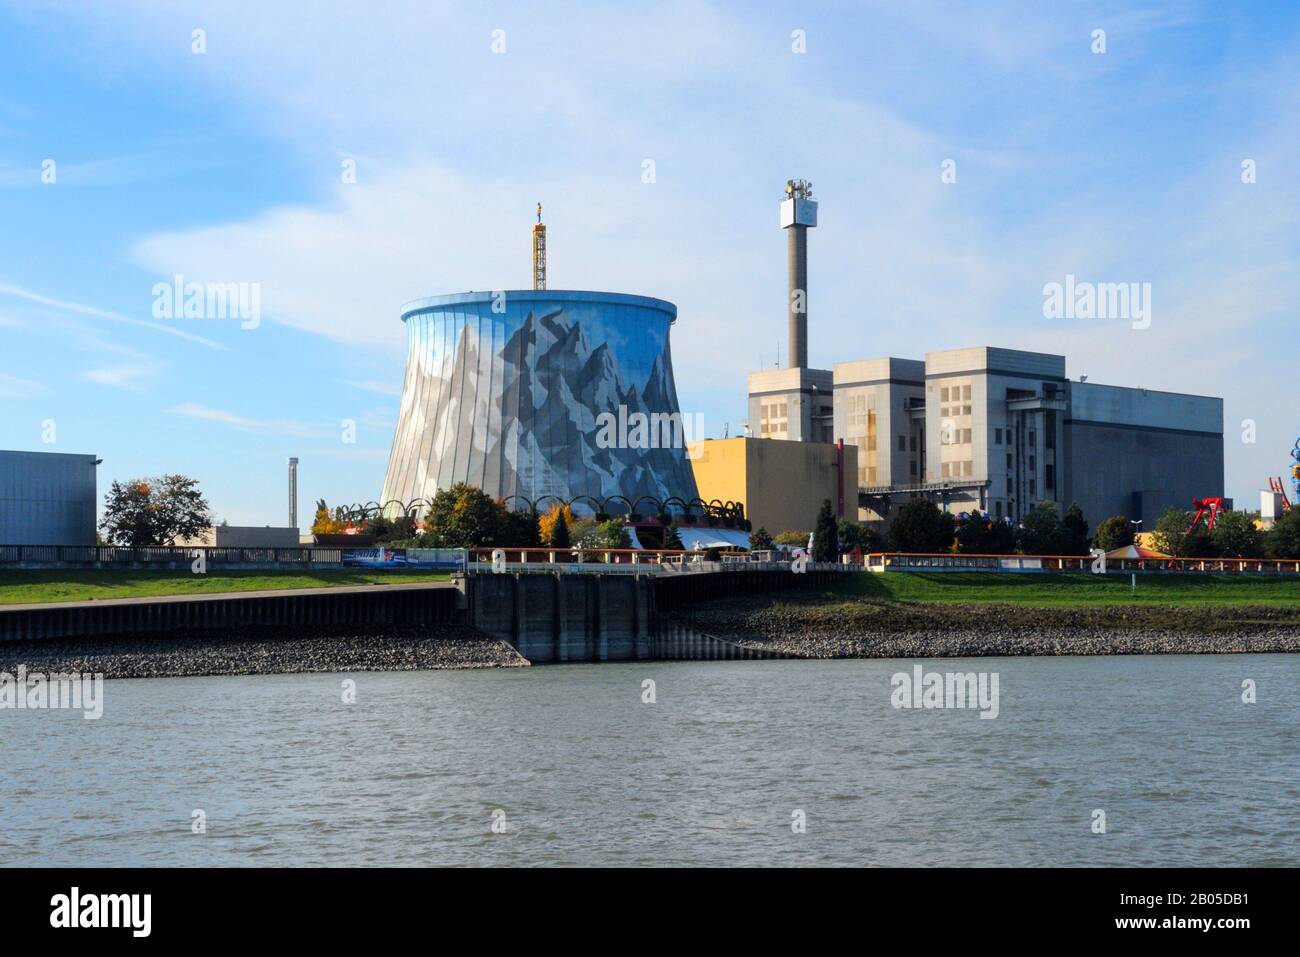 This German Amusement Park Is Inside A Nuclear Power Plant